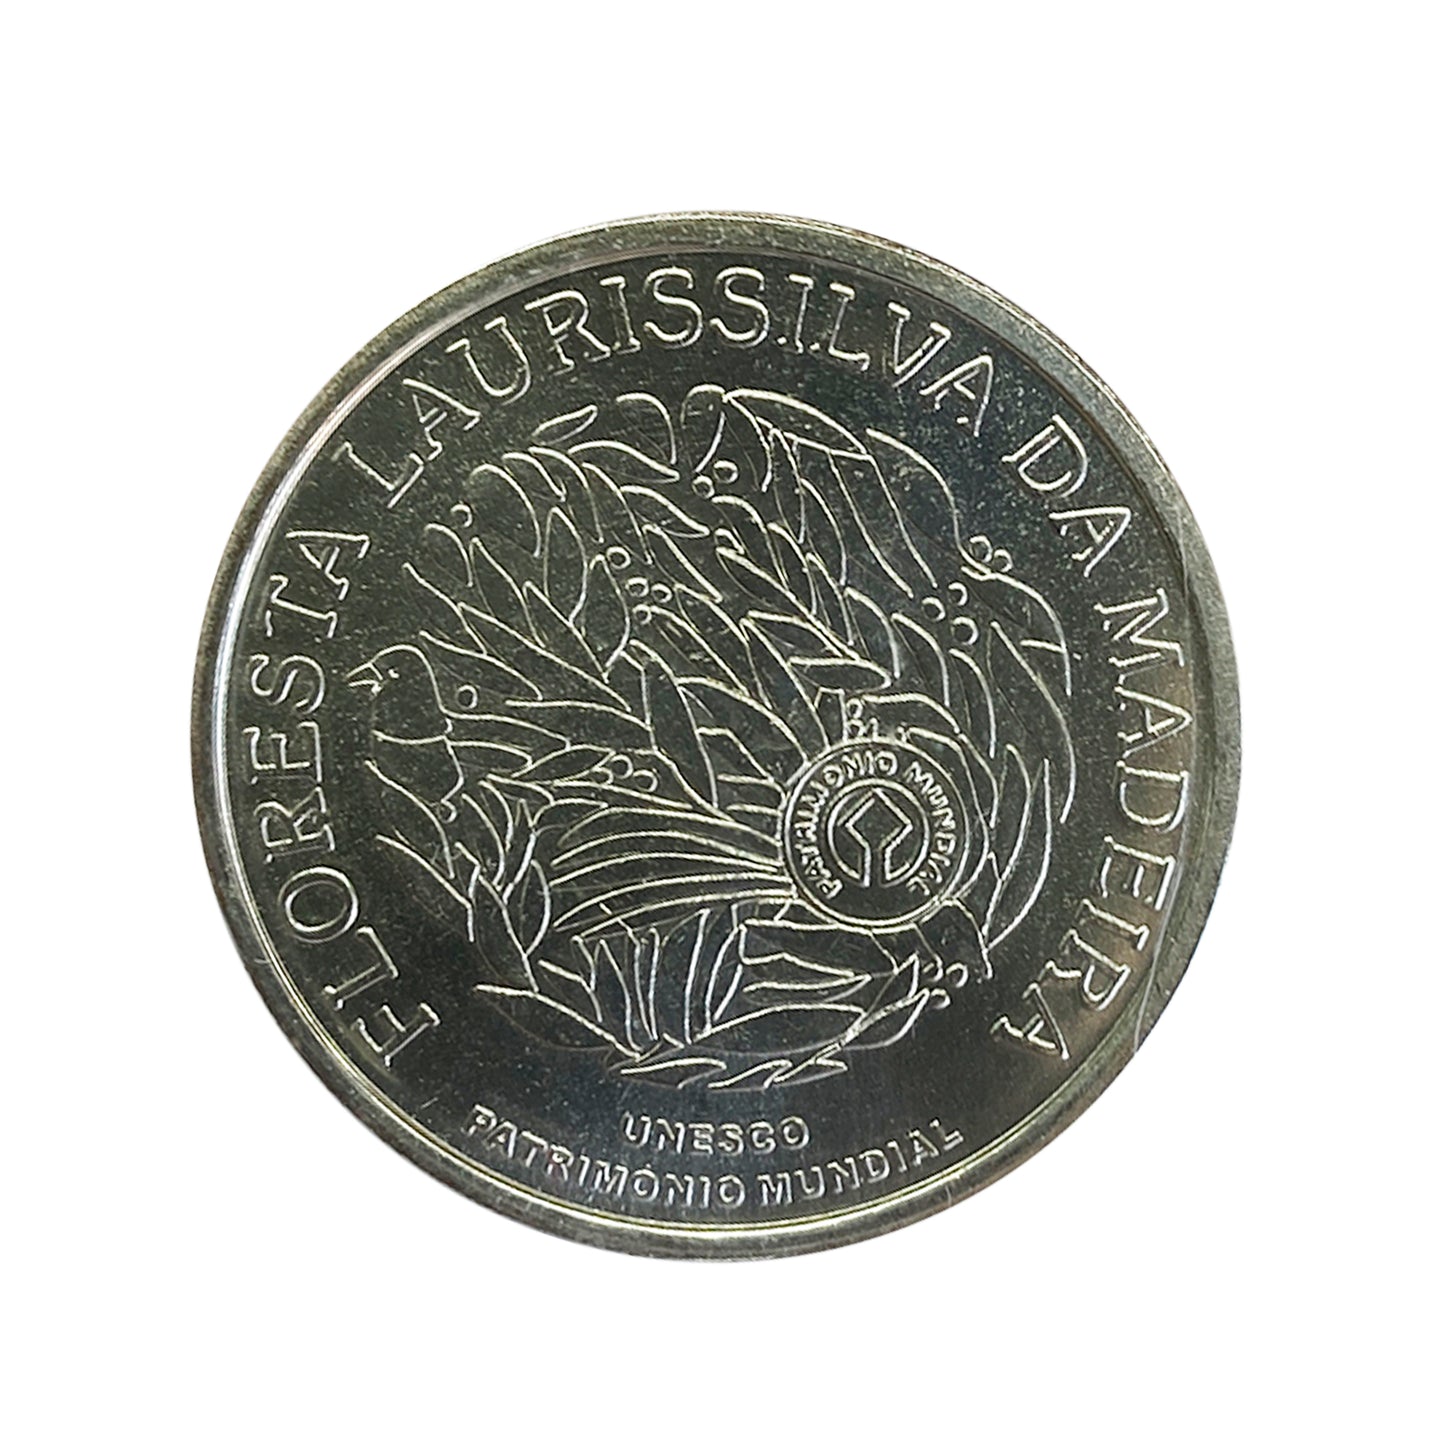 Portugal - Moneda 5 euros en plata 2007 - UNESCO Laurisilva Bosques de Madeira